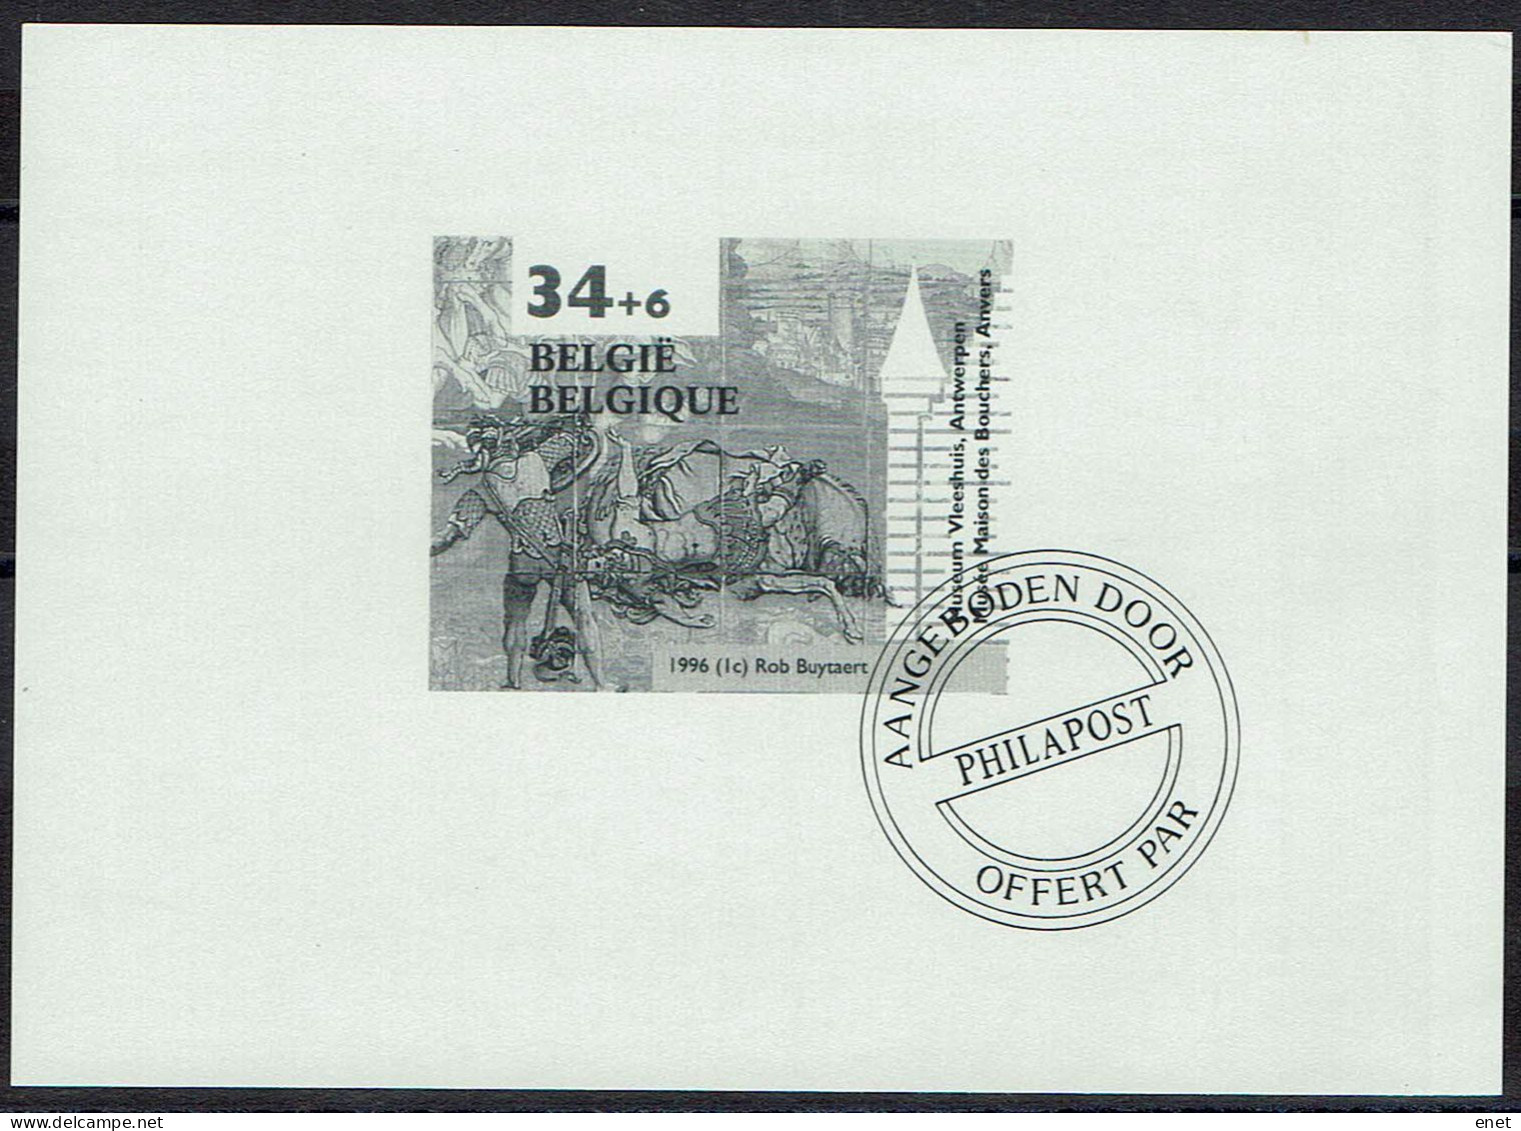 Belgie 1996 - OBP GCA1 (2626) Vleeshuis / Antwerpen - B&W Sheetlets, Courtesu Of The Post  [ZN & GC]